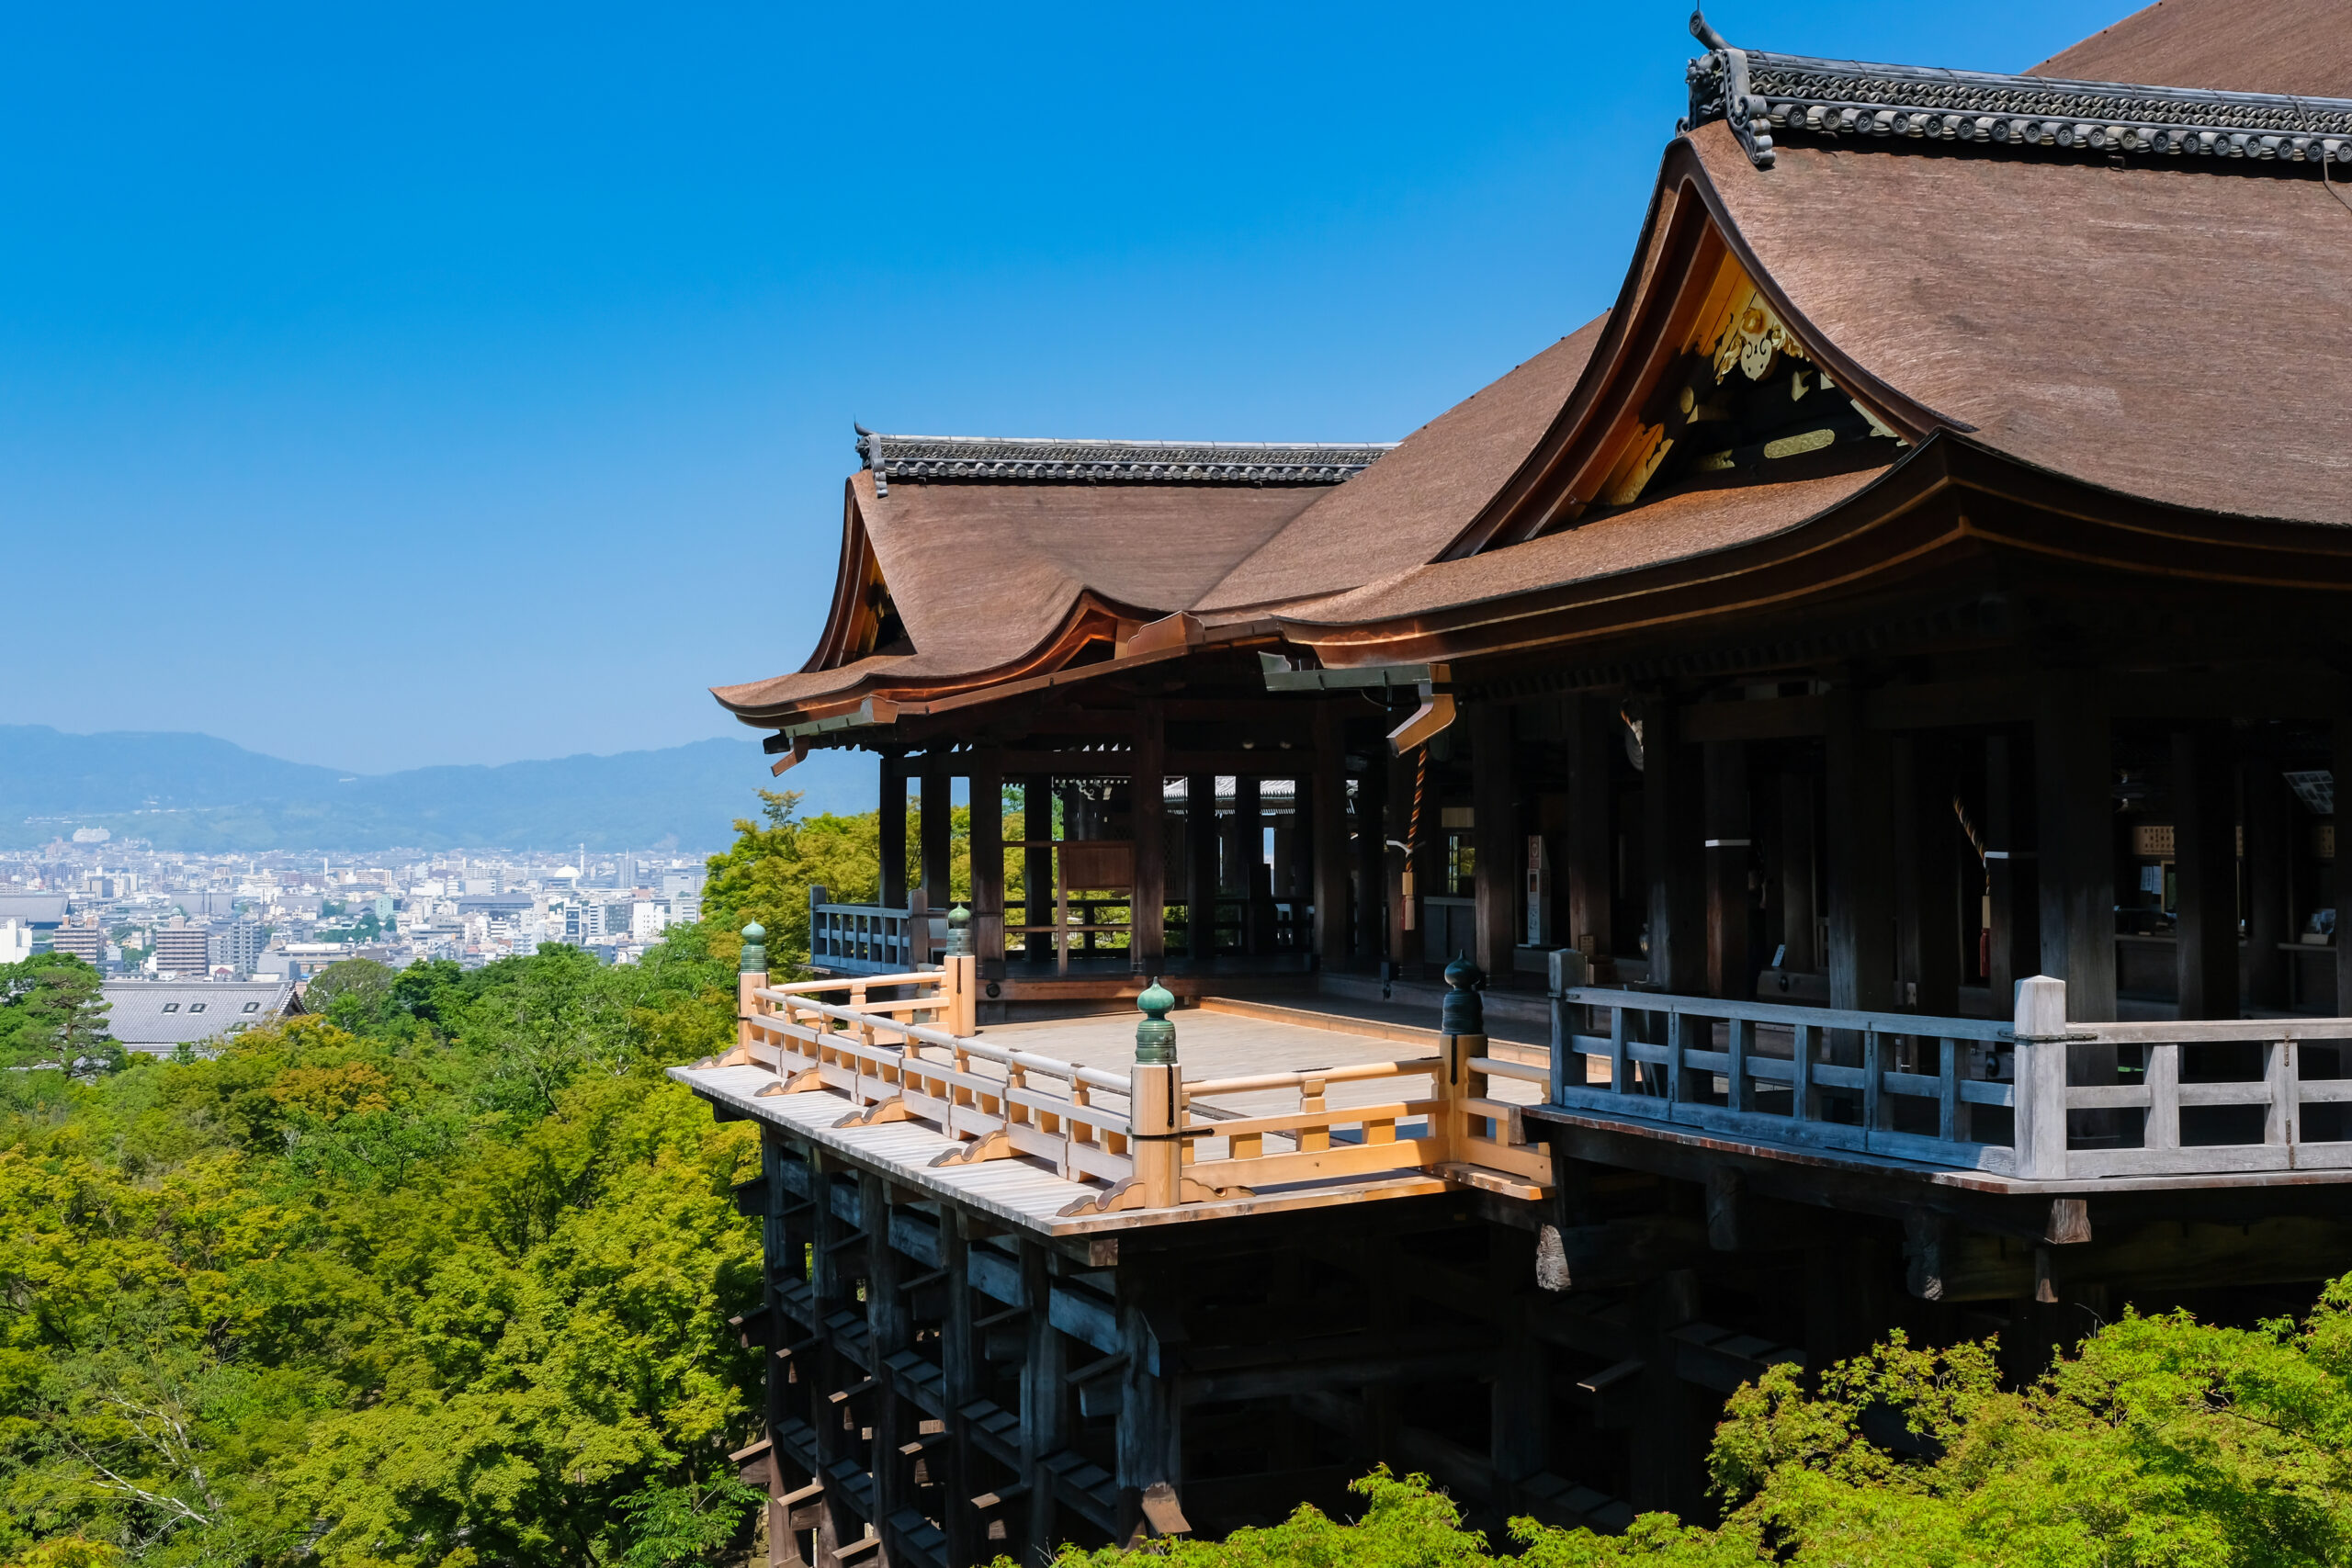 kiyomizu-dera temple